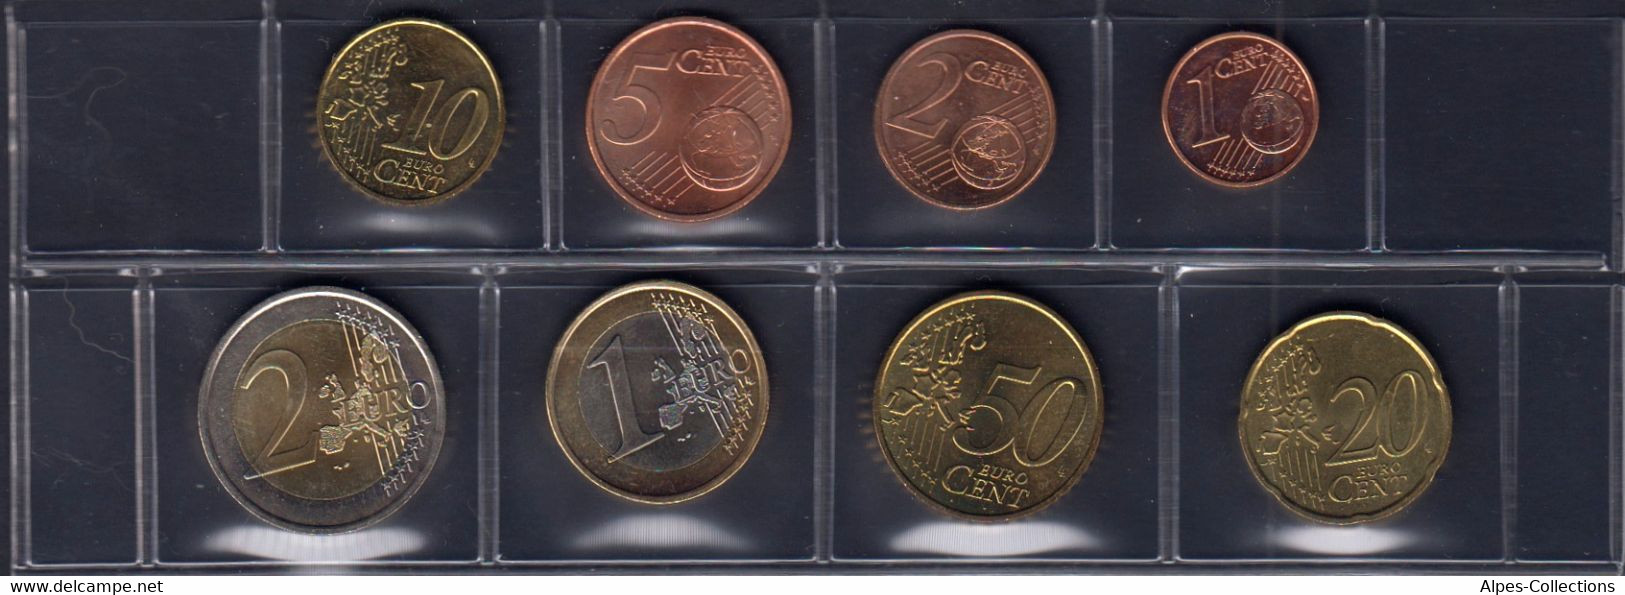 FRX2002.3 - SERIE FRANCE - 2002 - 1 Cent à 2 Euros - France